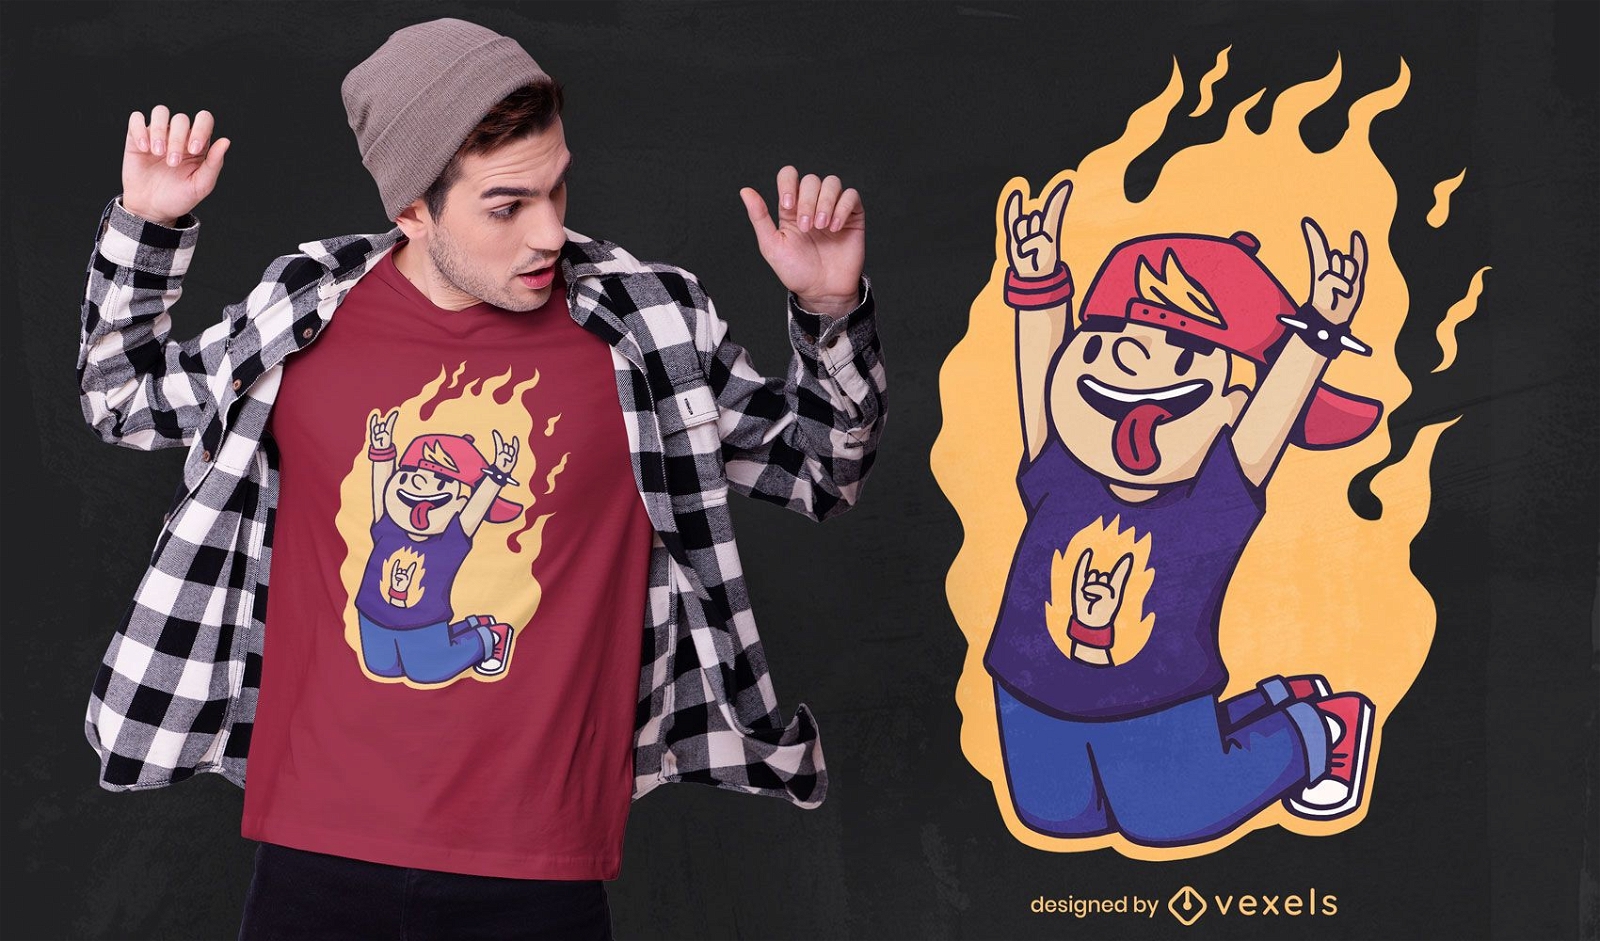 Kid rock n roll on fire t-shirt design